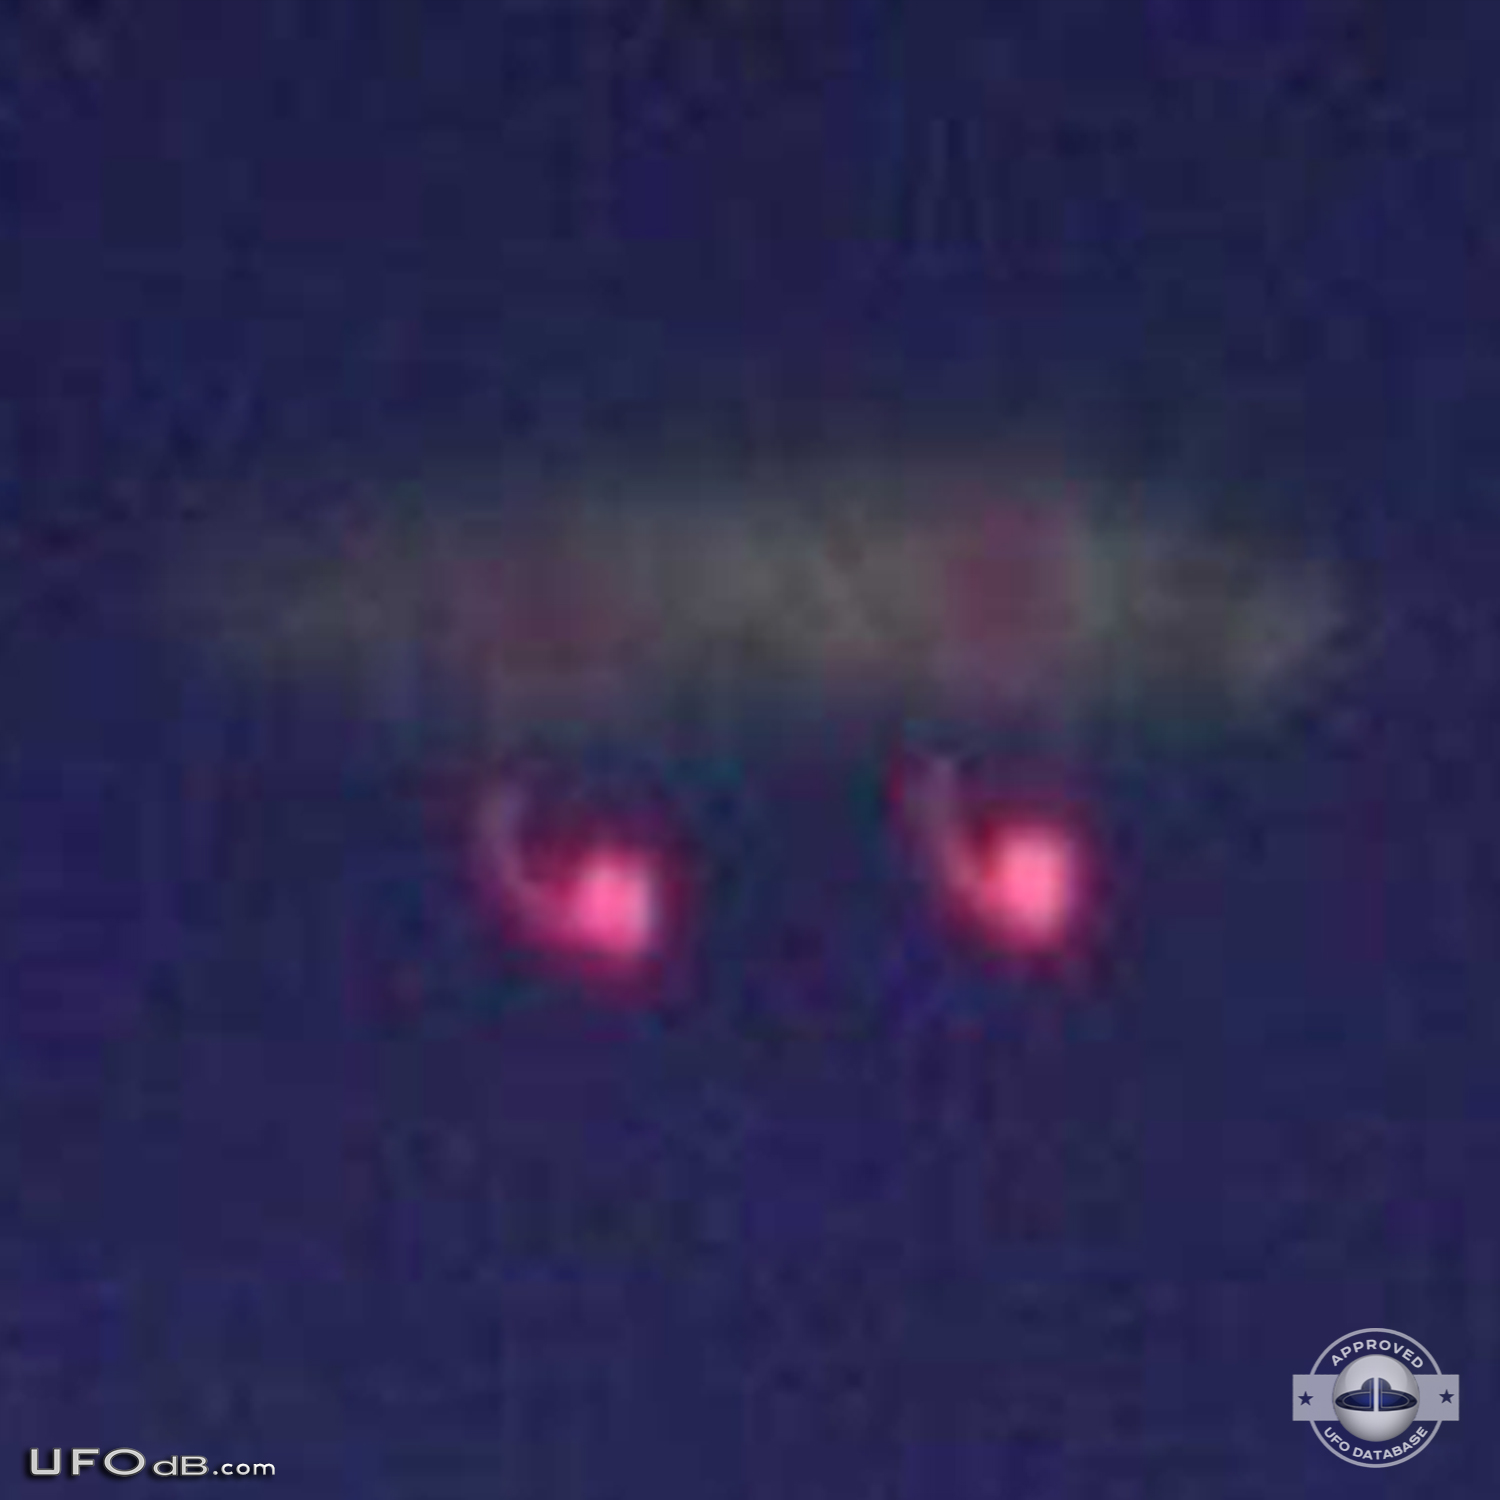 Strange Saucer UFO over Bruges Belgium caugh on picture in 2005 UFO Picture #434-5